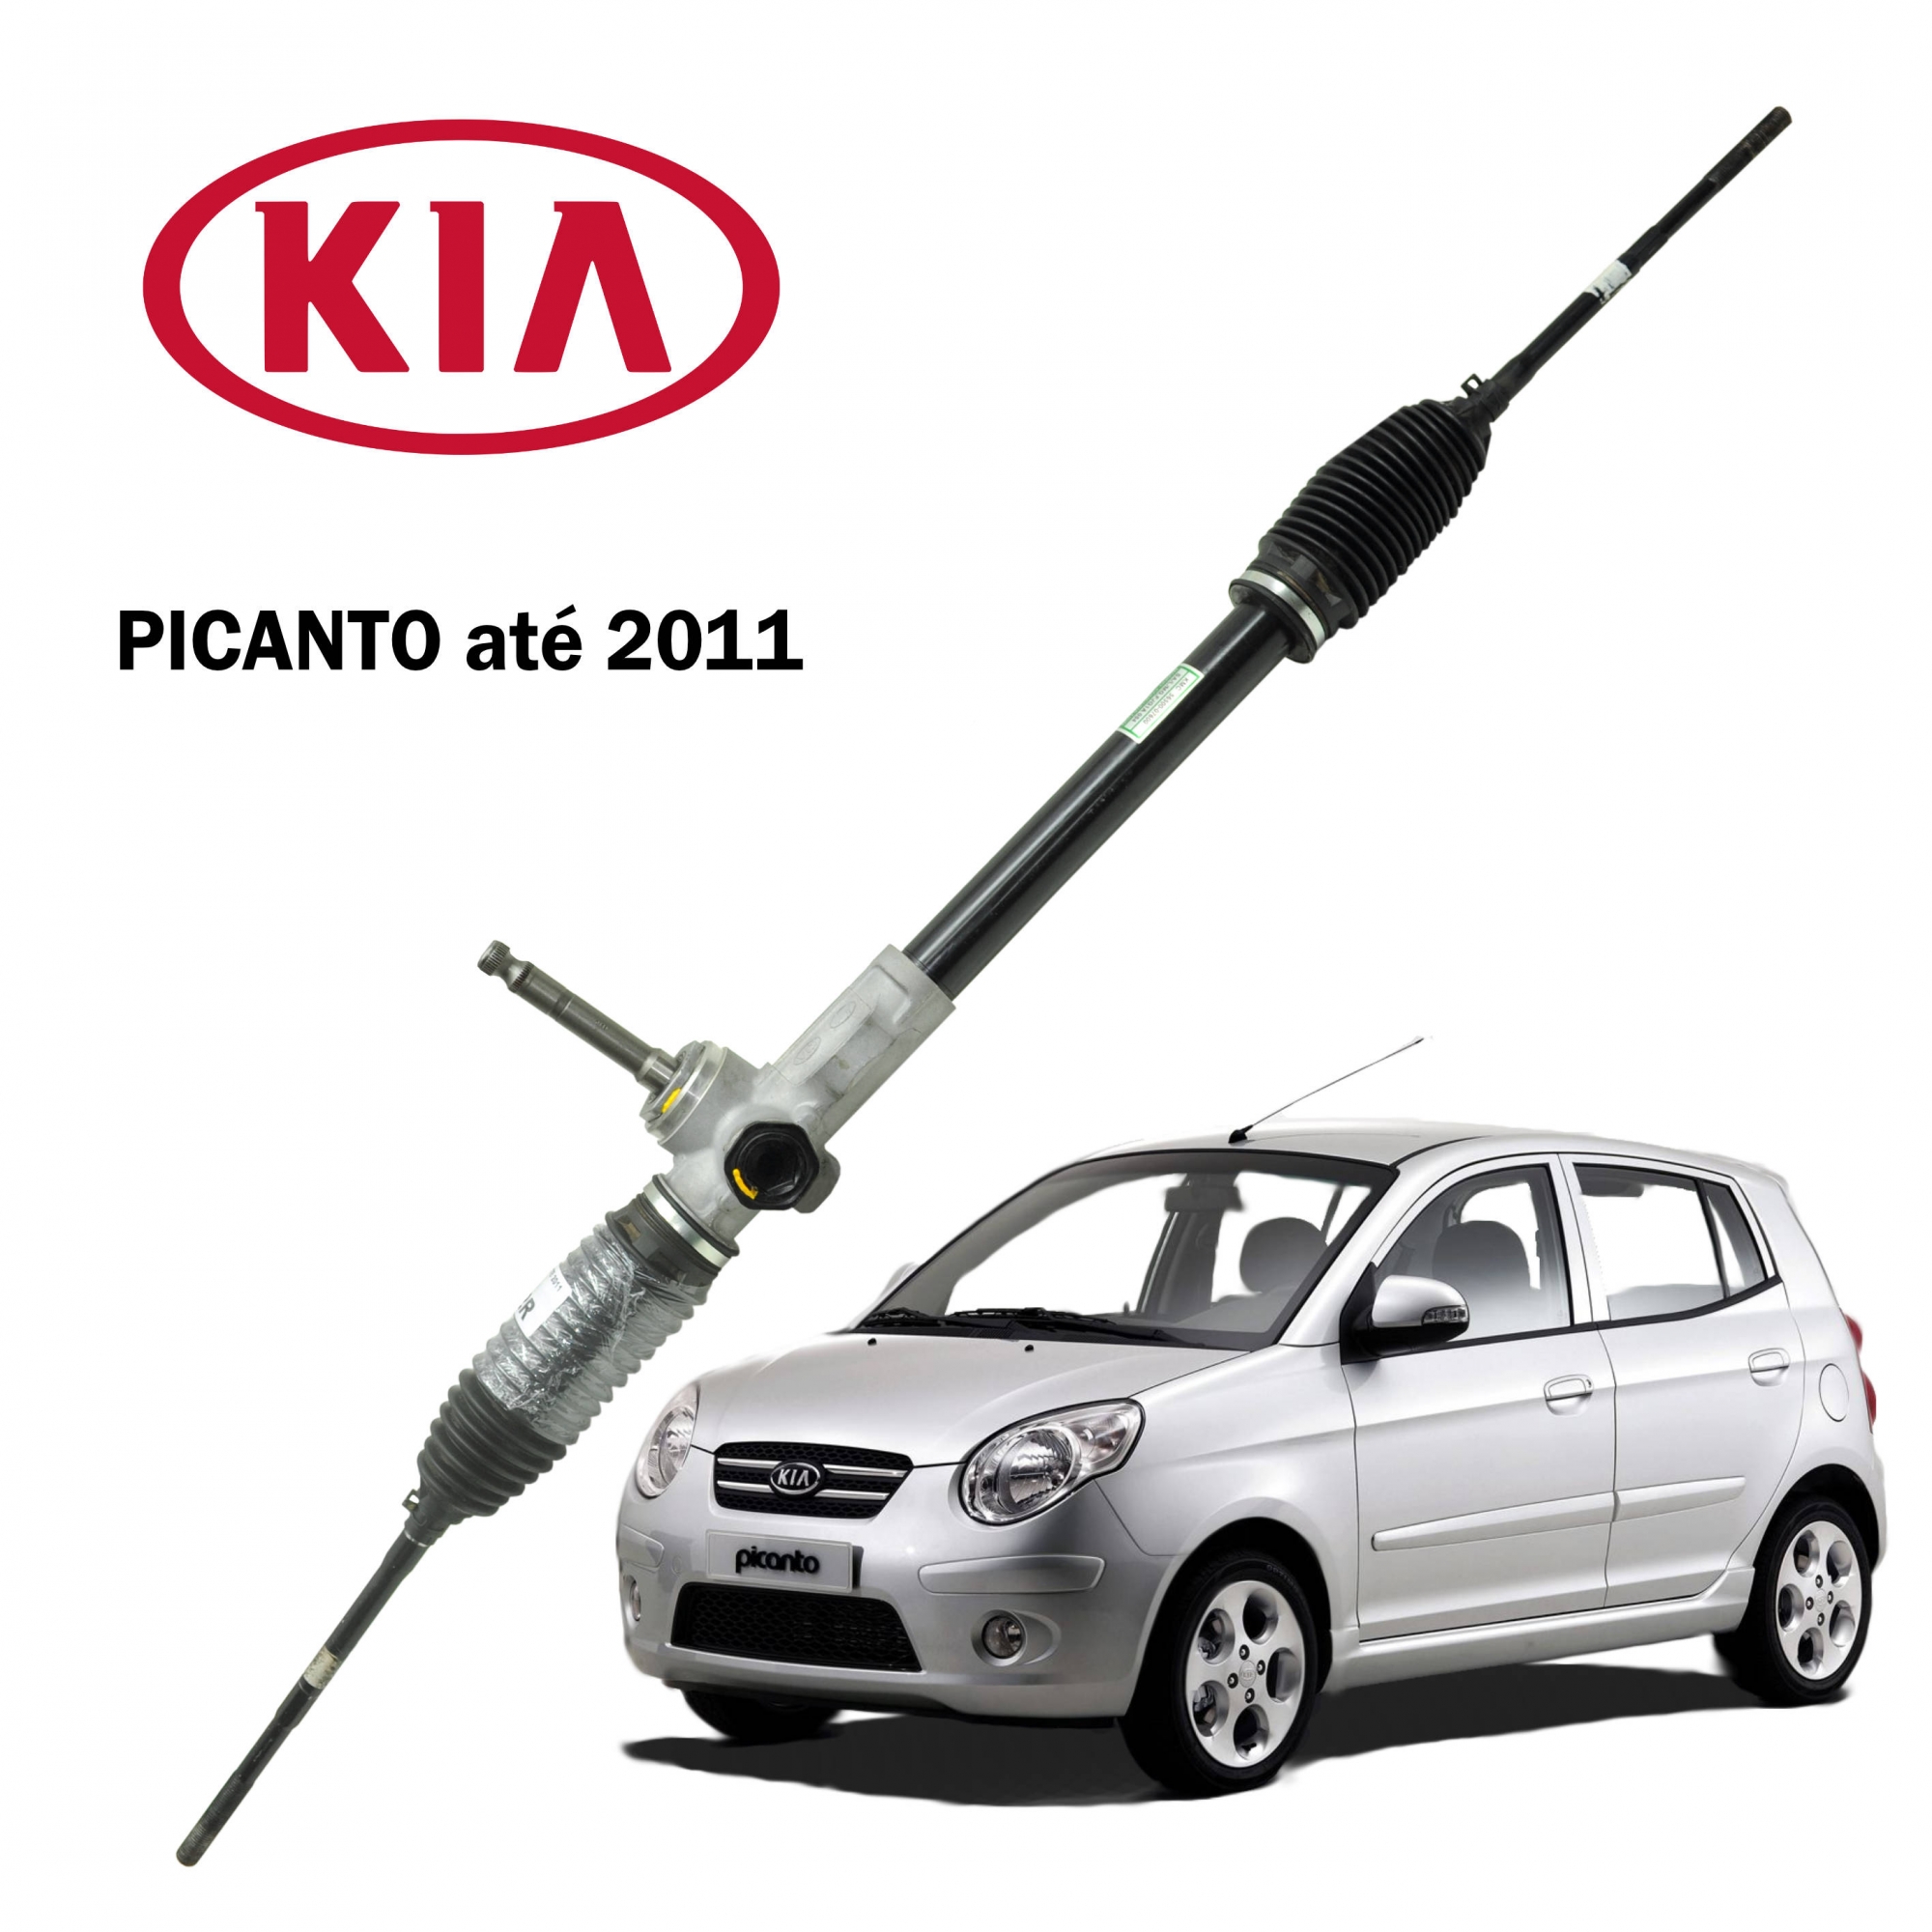 Caixa Direção KIA Picanto até 2011 (Sistema Elétrico)